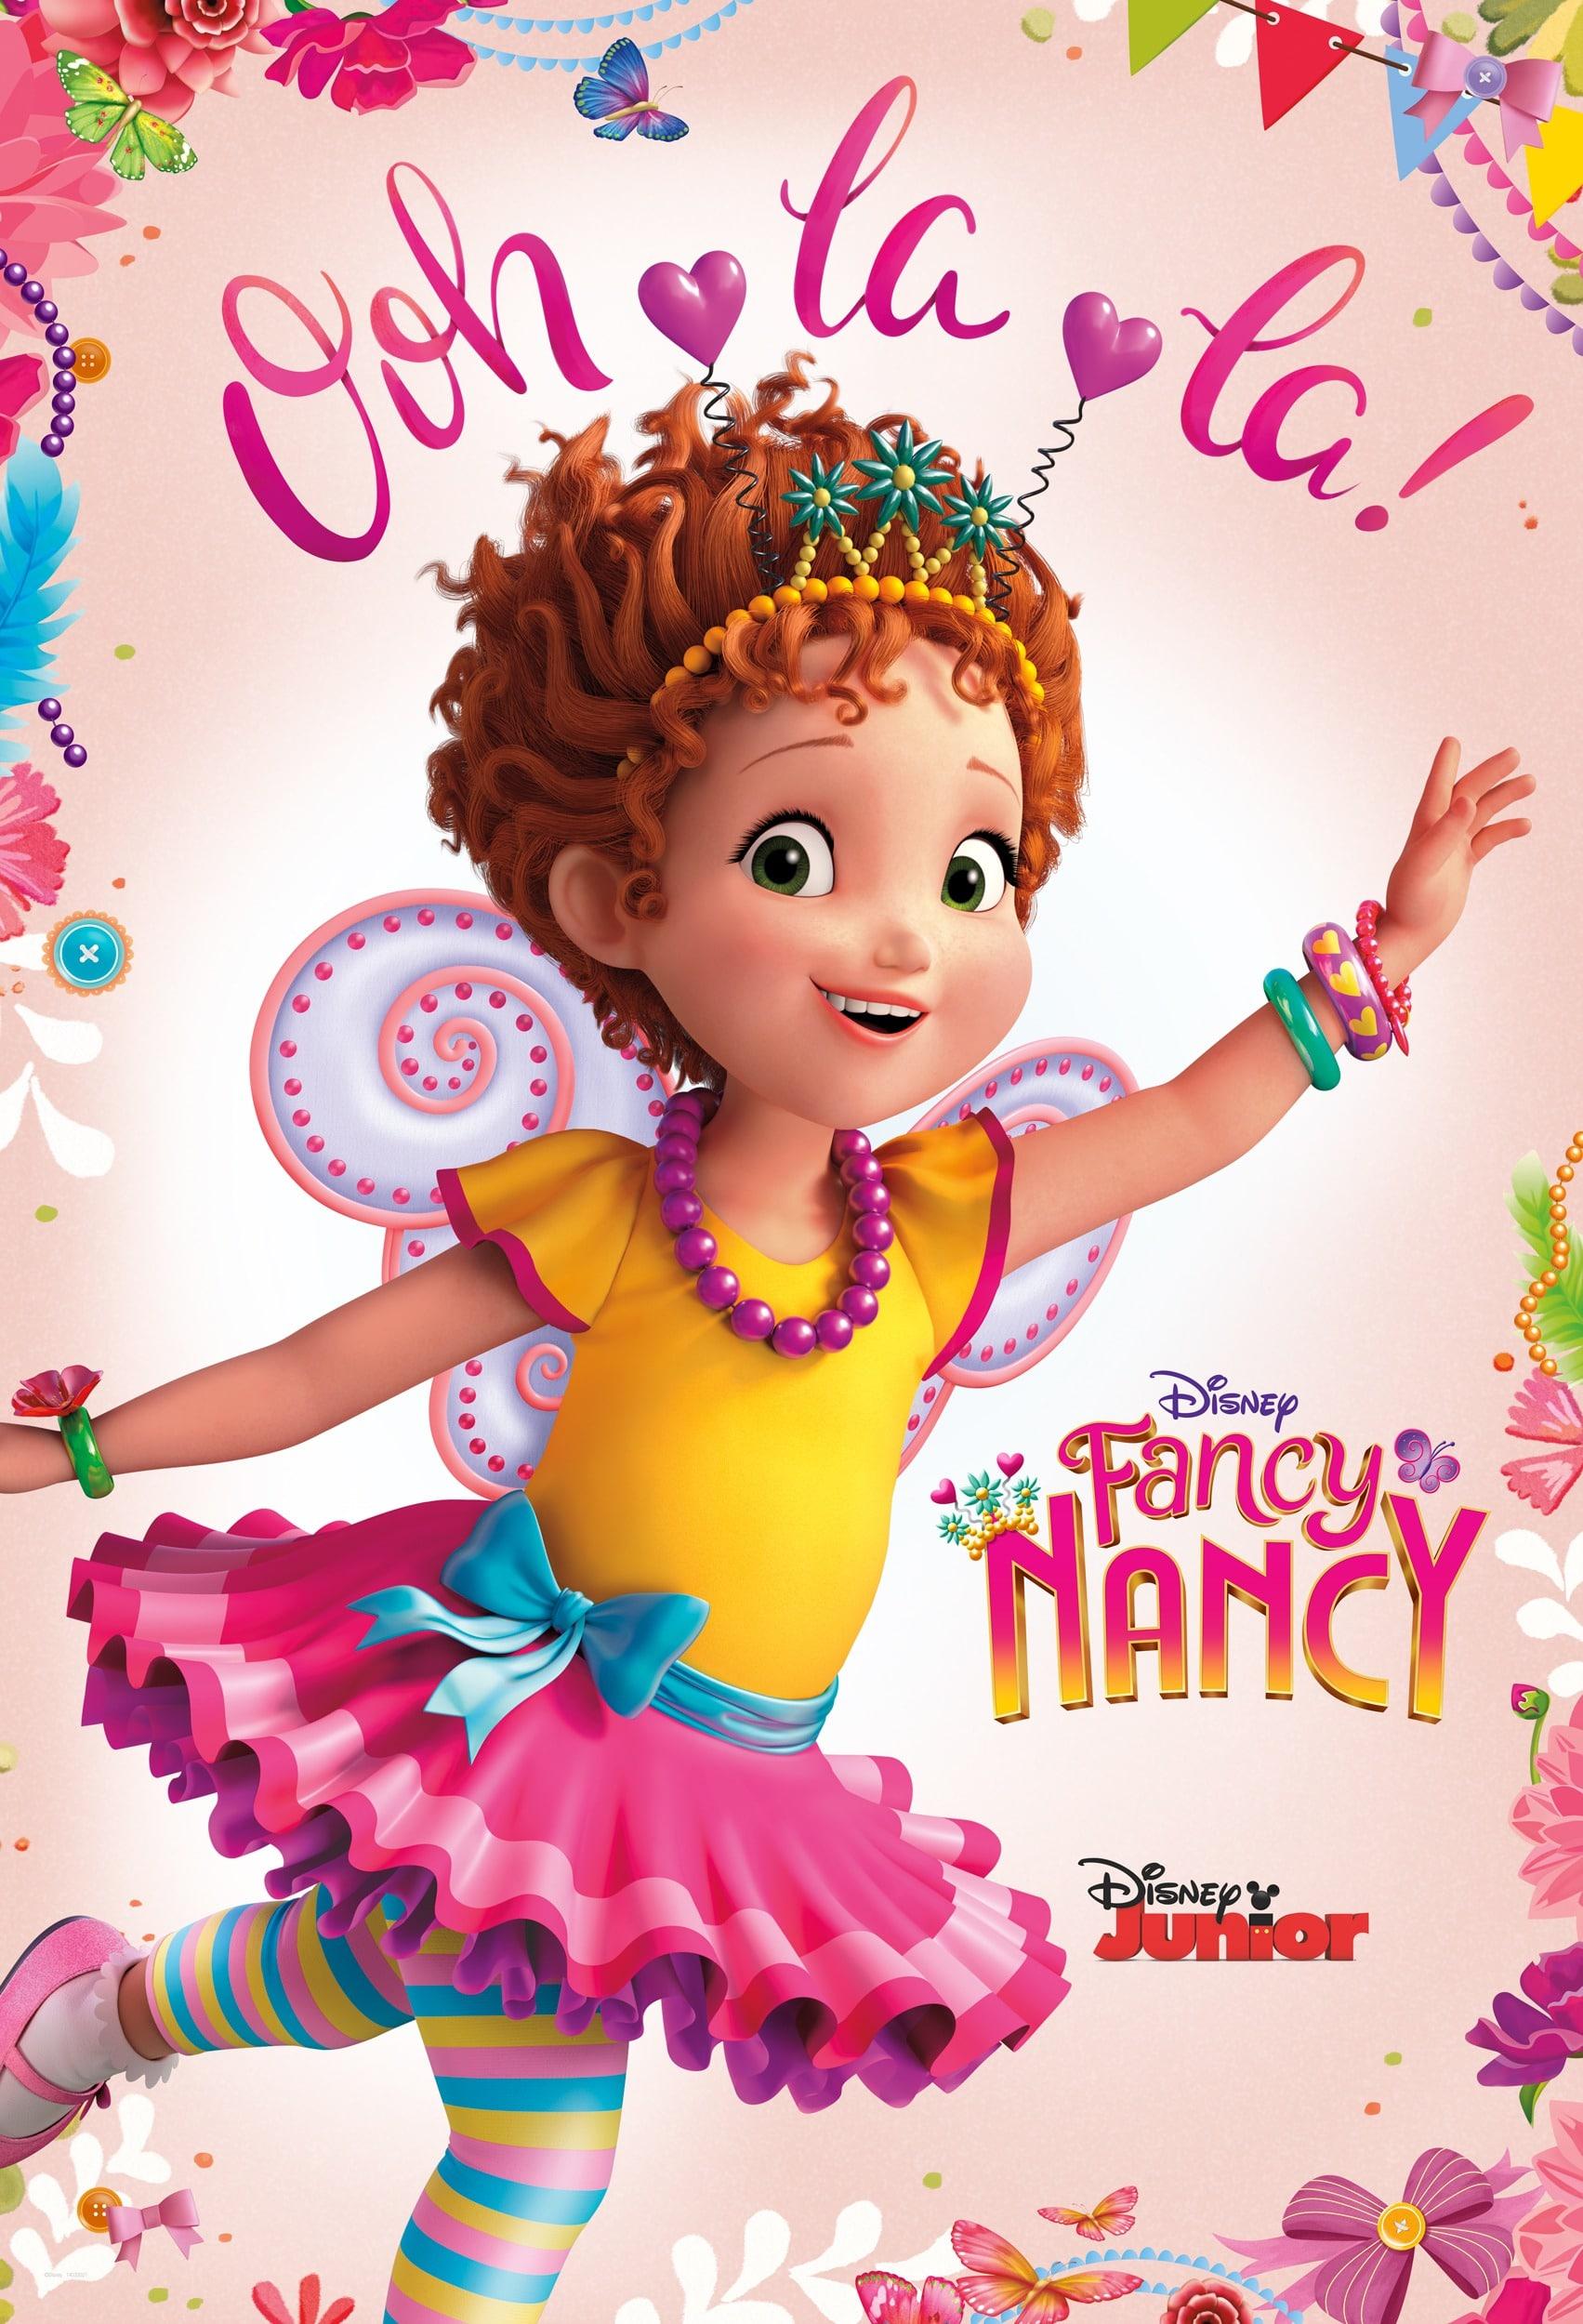 Disney Junior Fancy Nancy is Fantastique!